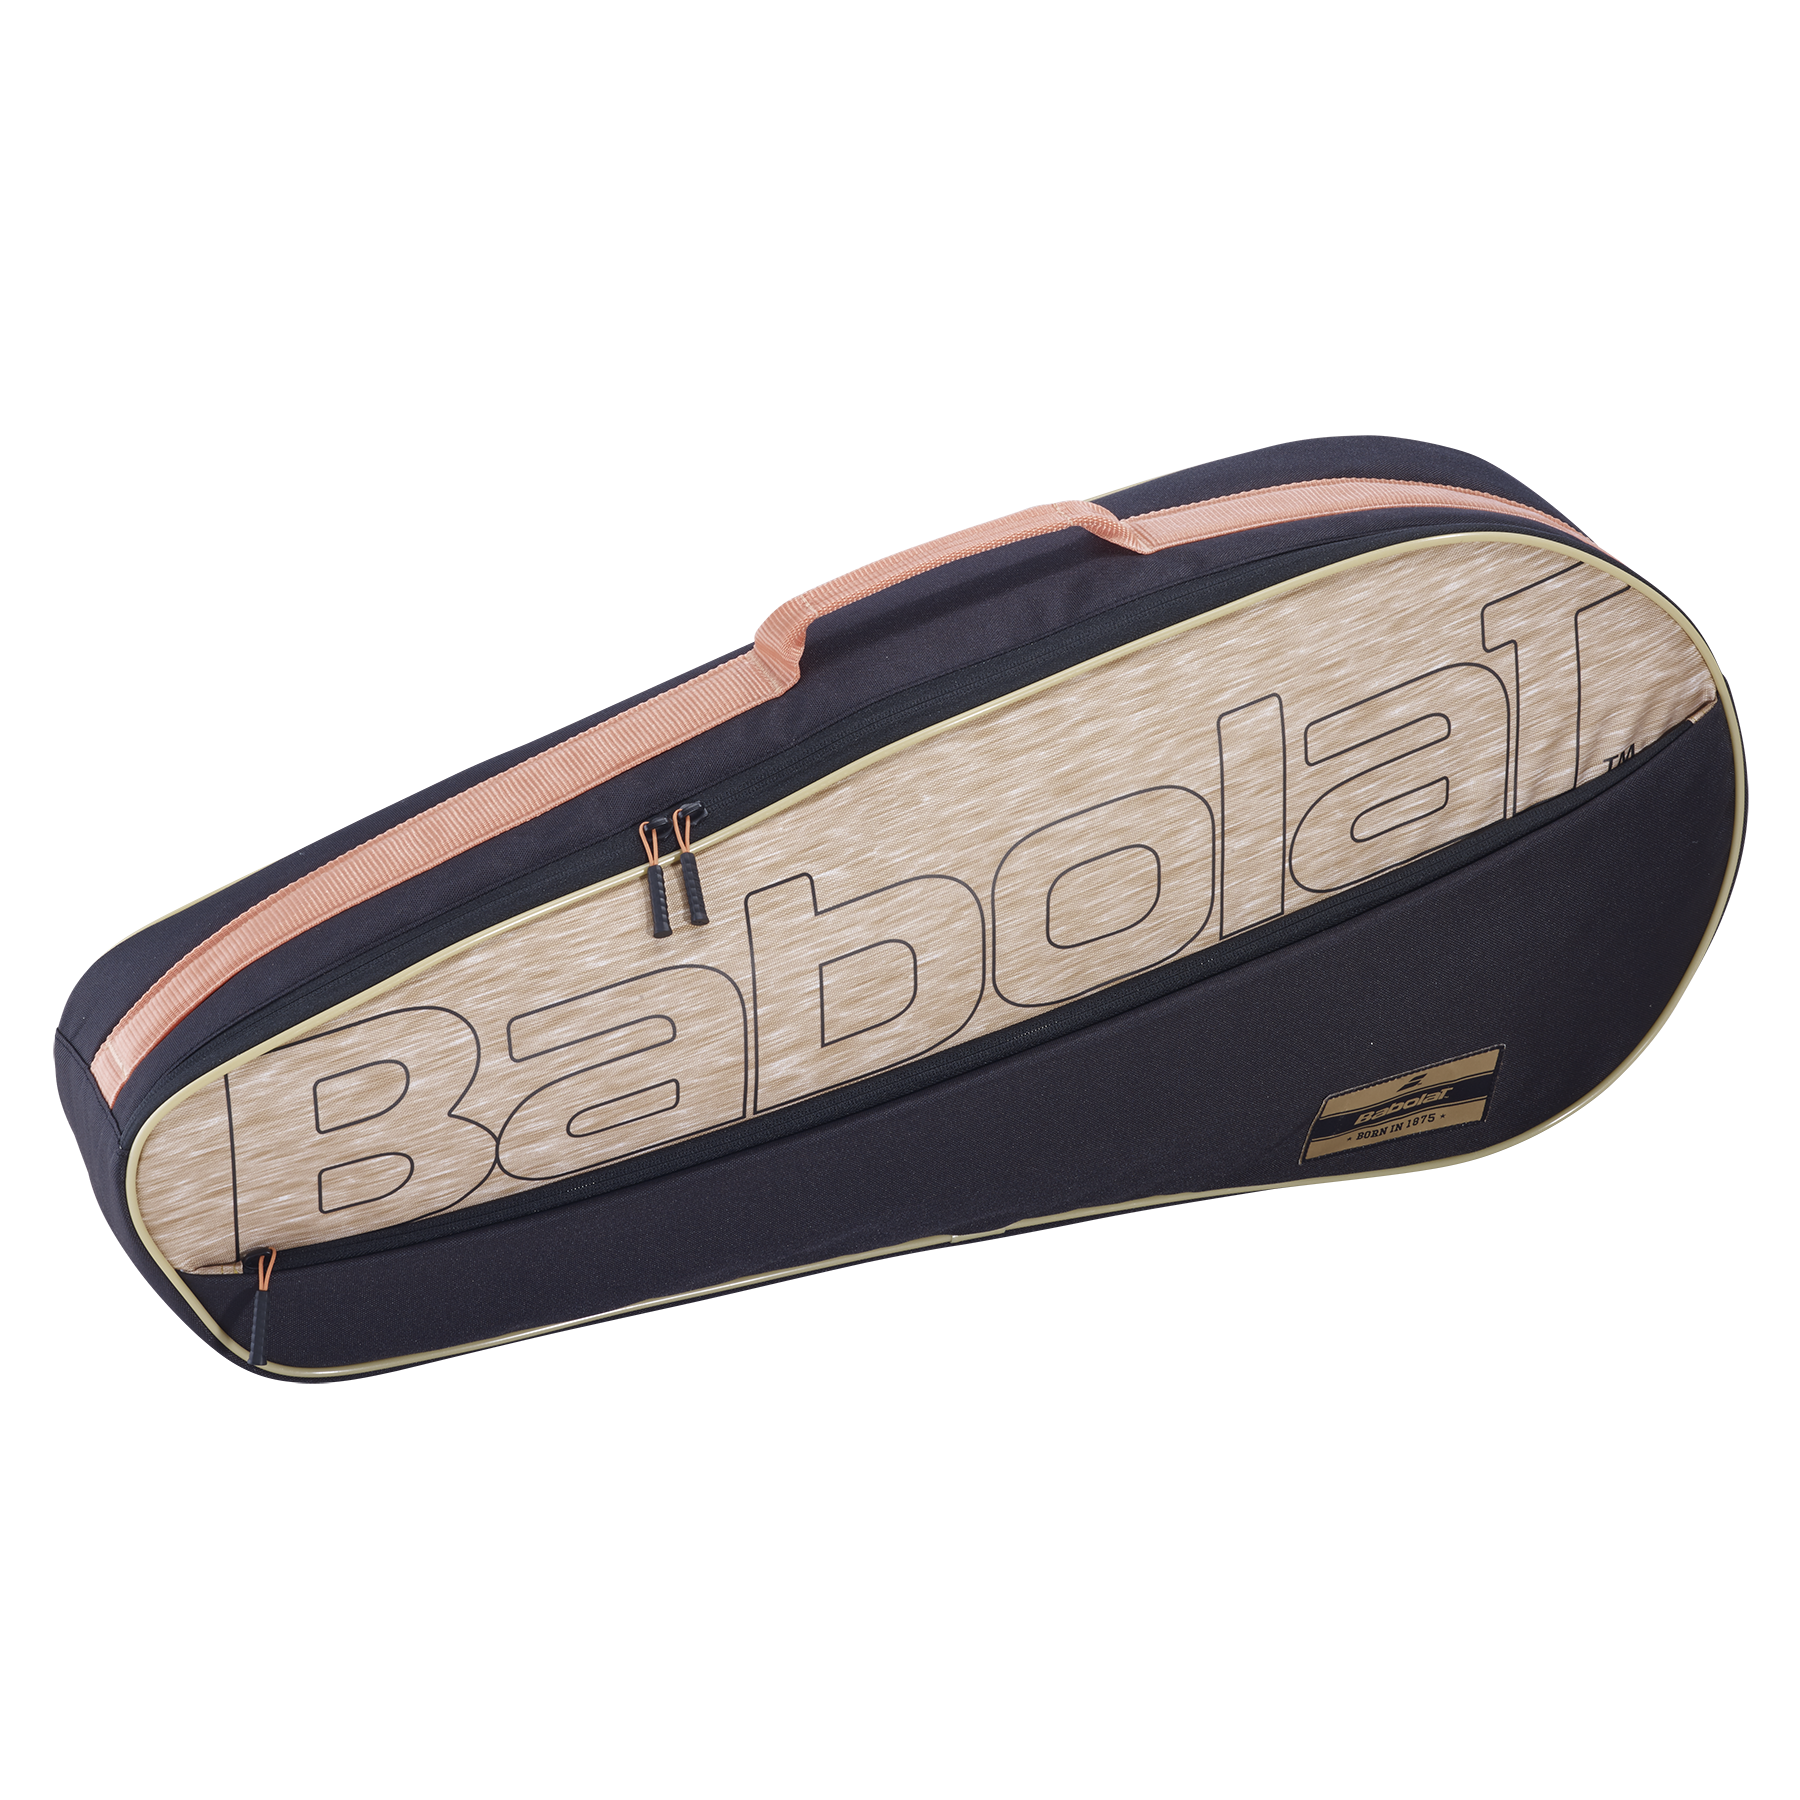 Tennis Bag RH3 Essential Babolat Official Website